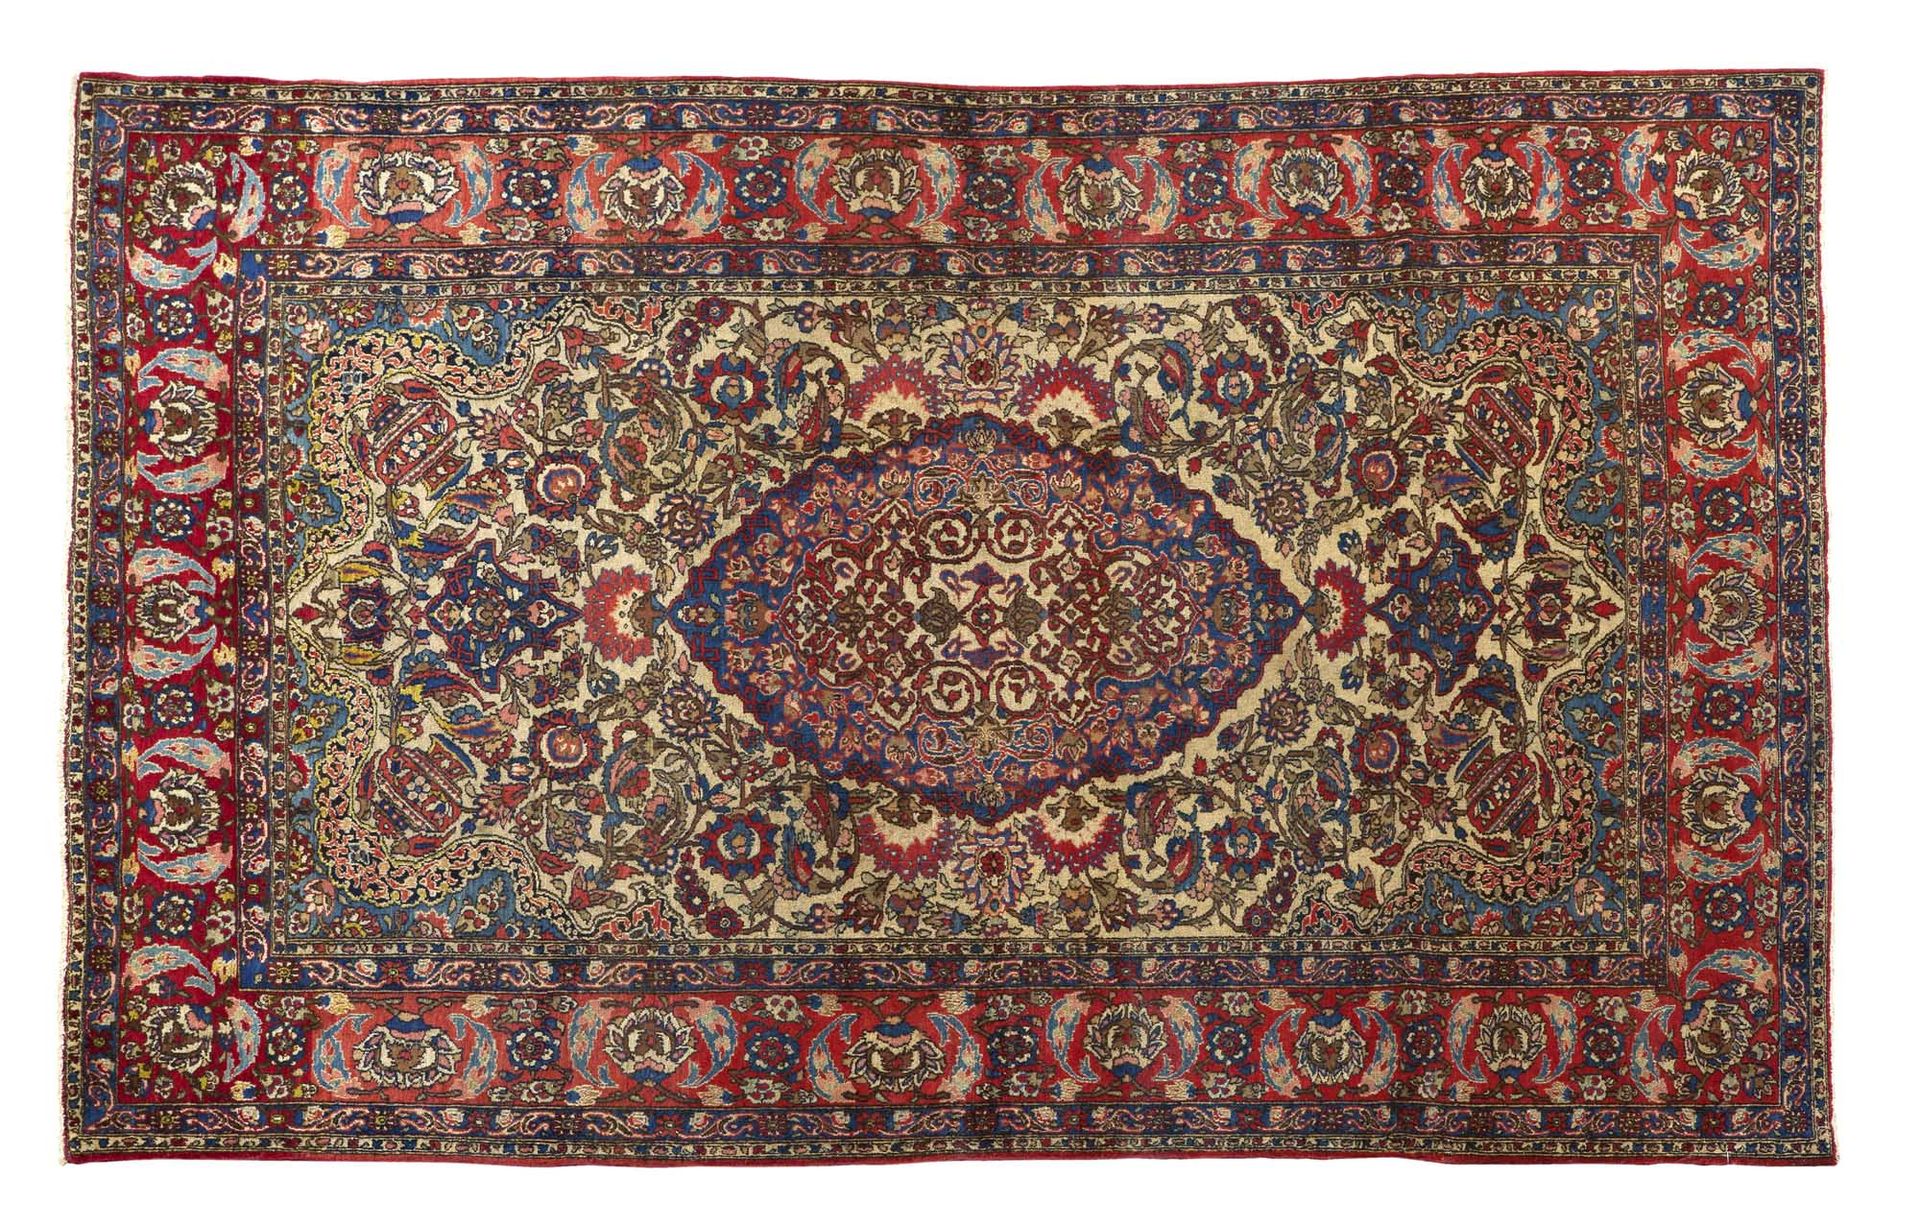 Null Fine ISPAHAN carpet, (Persia), late 19th century

Dimensions : 211 x 141cm
&hellip;